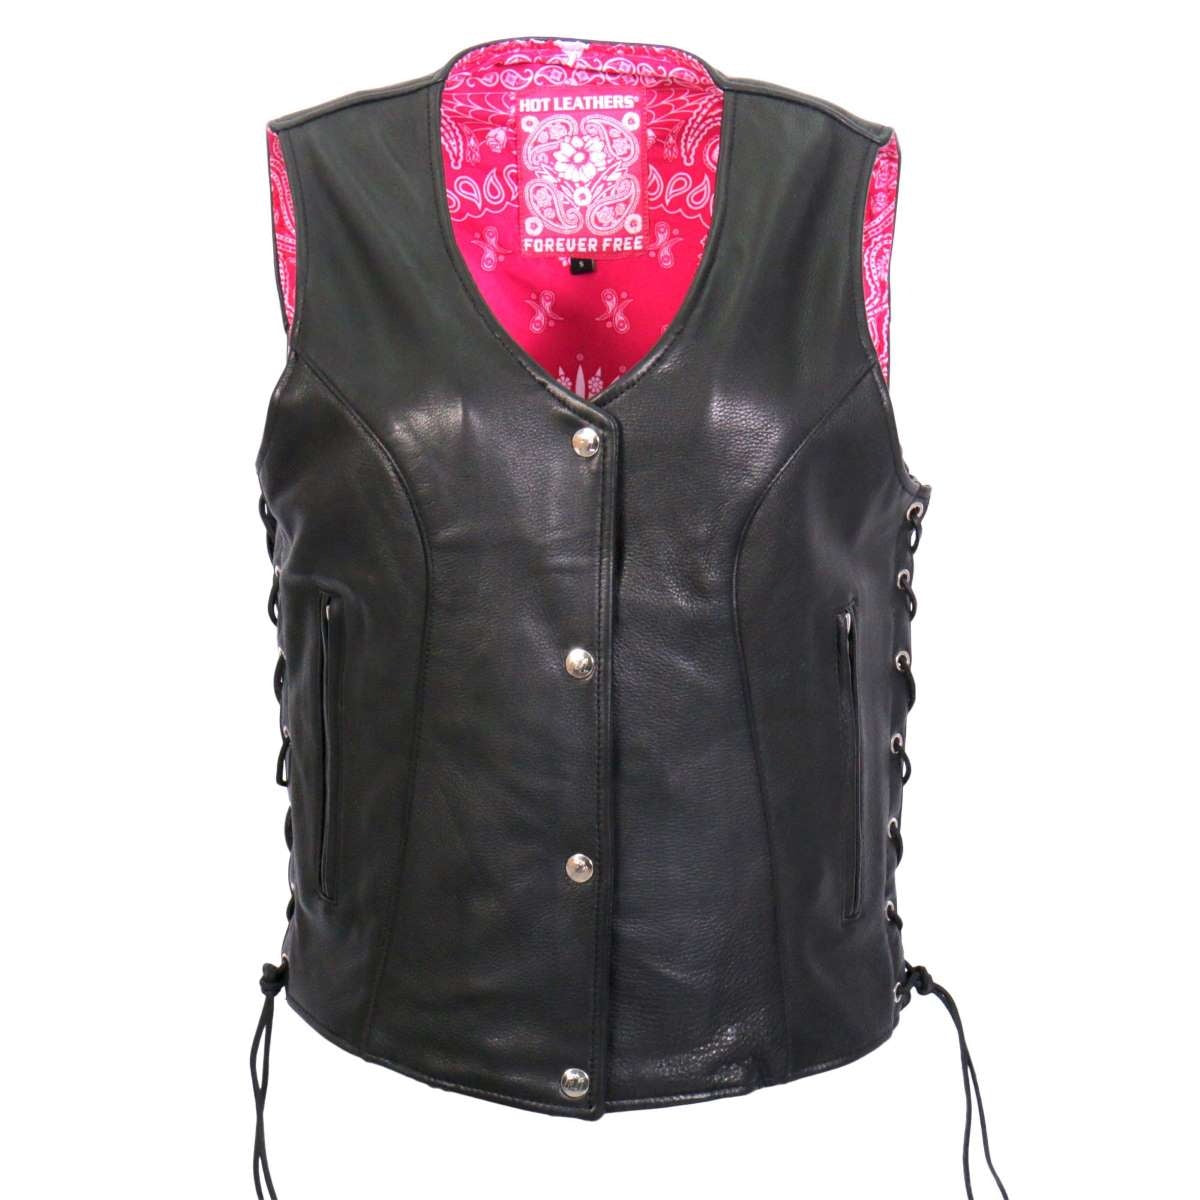 Hot Leathers VSL1018 Ladies 'Pink Paisley' Lined Black Leather MC Vest